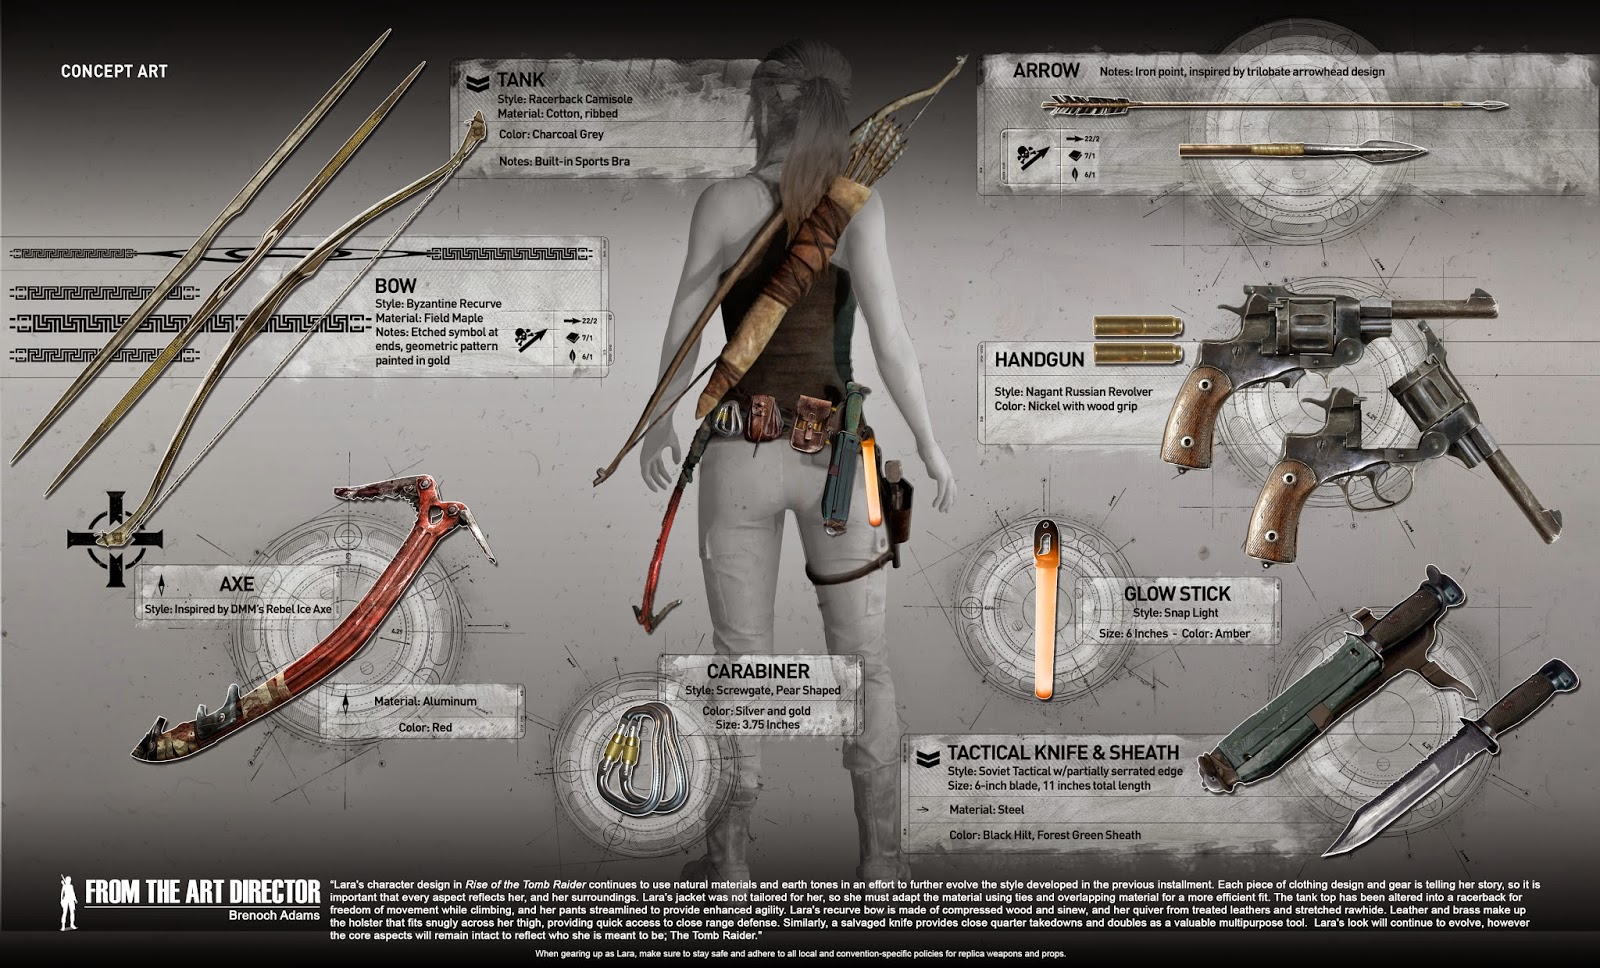 Tomb Raider: A Lenda de Lara Croft Primeiro Olhar_OFFICIAL TRAILER